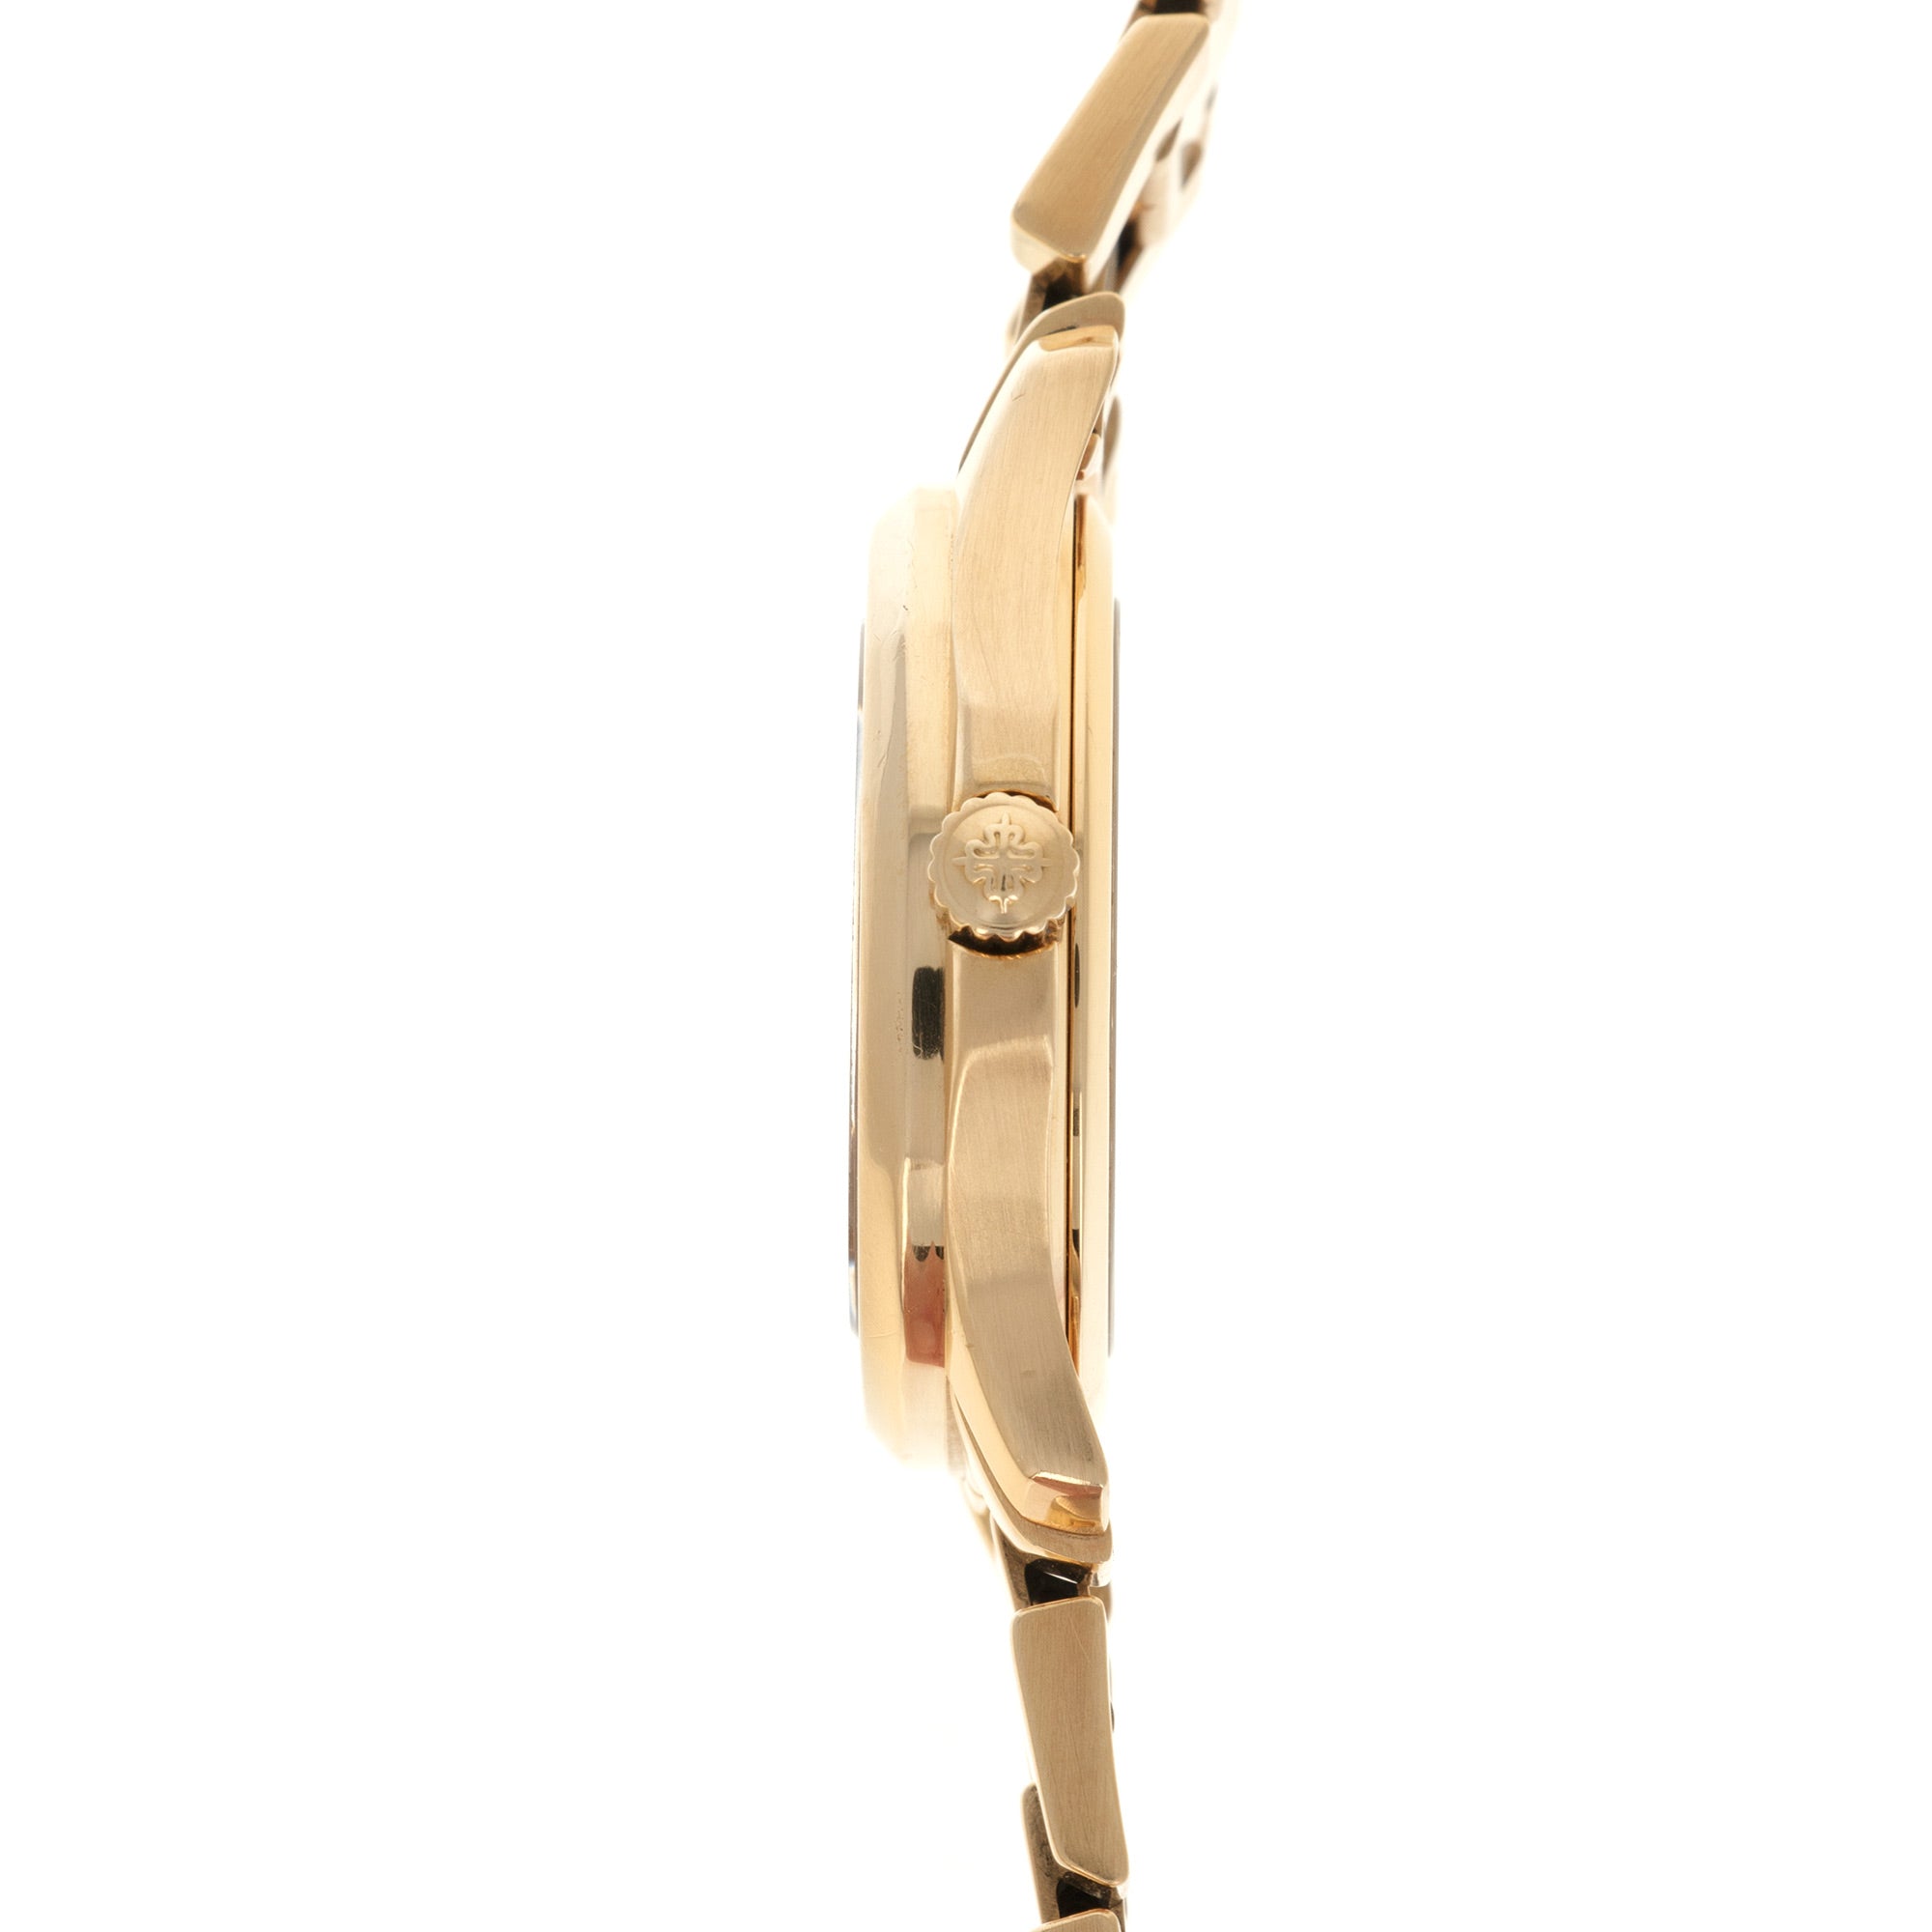 Patek Philippe - Patek Philippe Yellow Gold Aquanaut Automatic Watch Ref. 5066 - The Keystone Watches